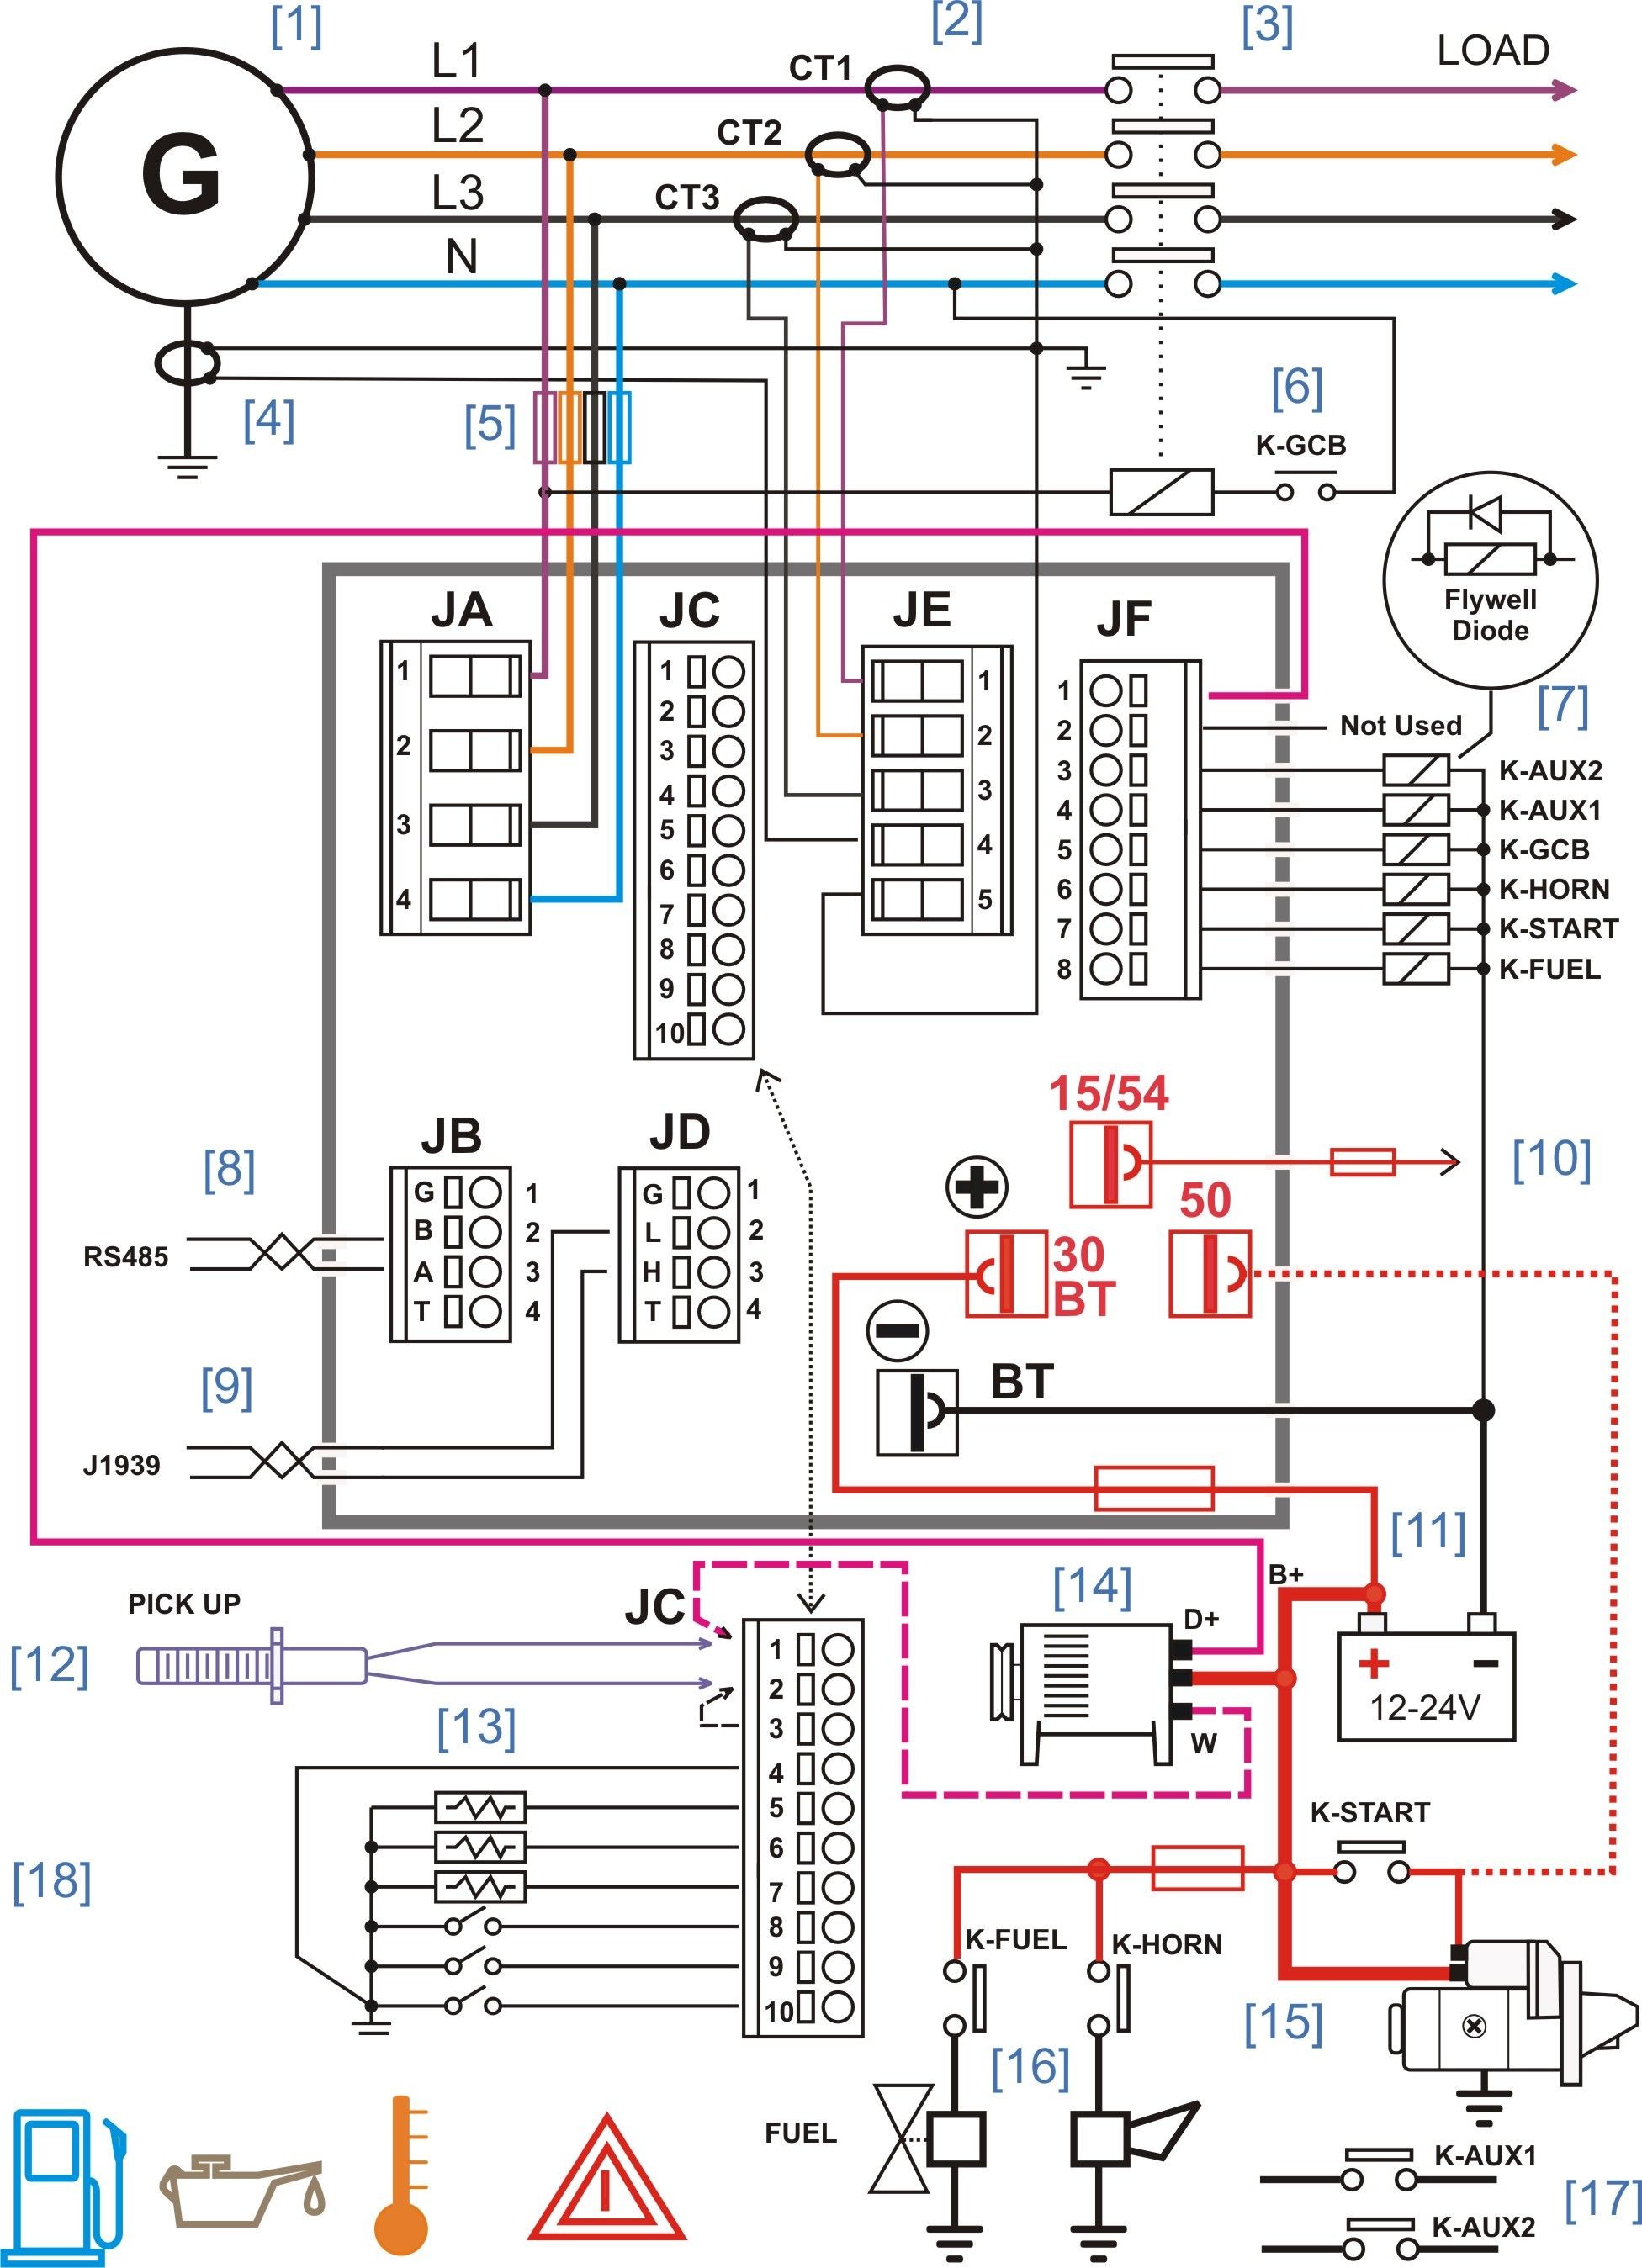 Diesel Generator Control Panel Wiring Diagram 30 New Car Aircon Electrical Wiring Diagram